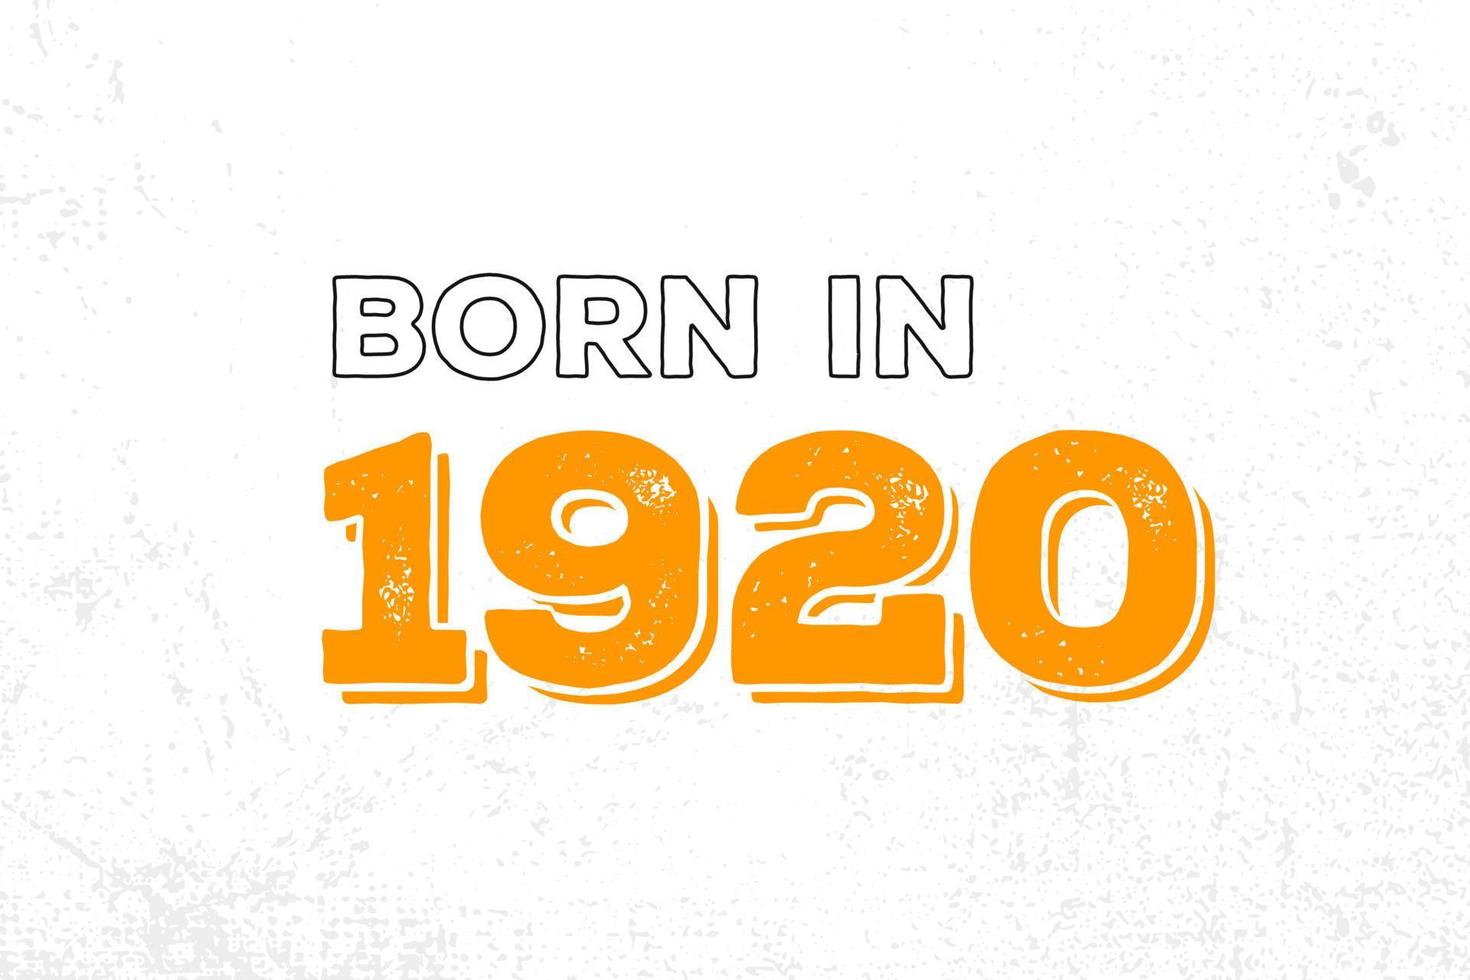 Born in 1920. Proud 1920 birthday gift tshirt design vector